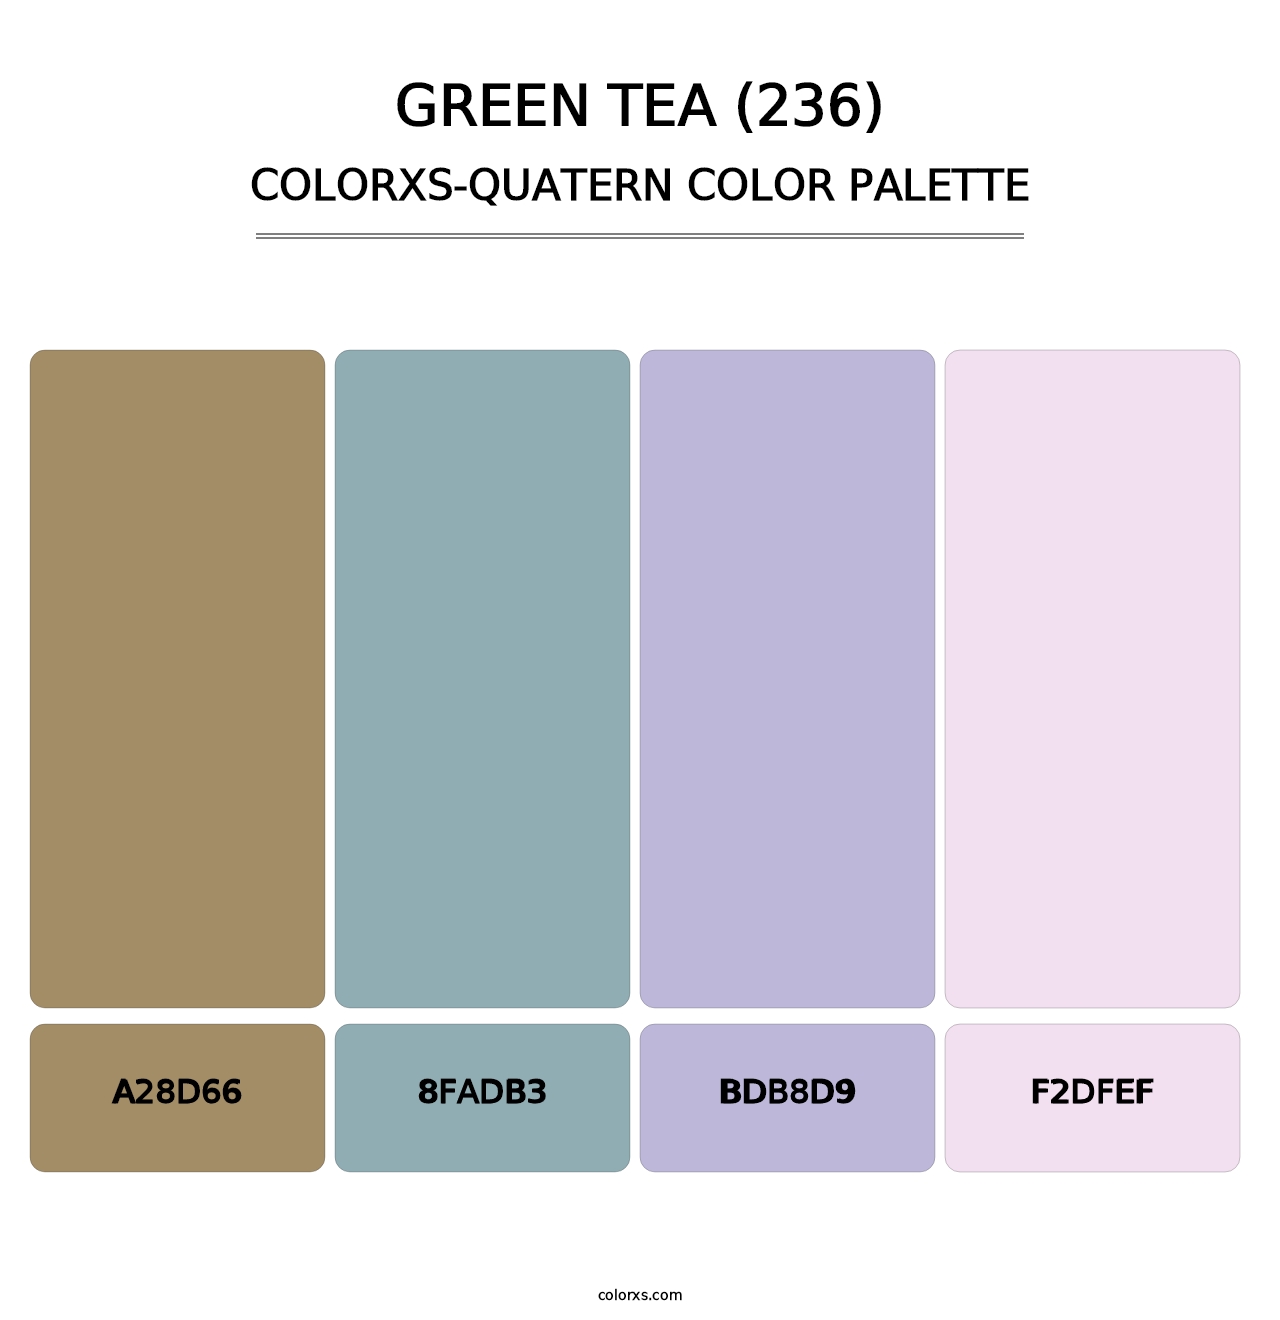 Green Tea (236) - Colorxs Quatern Palette